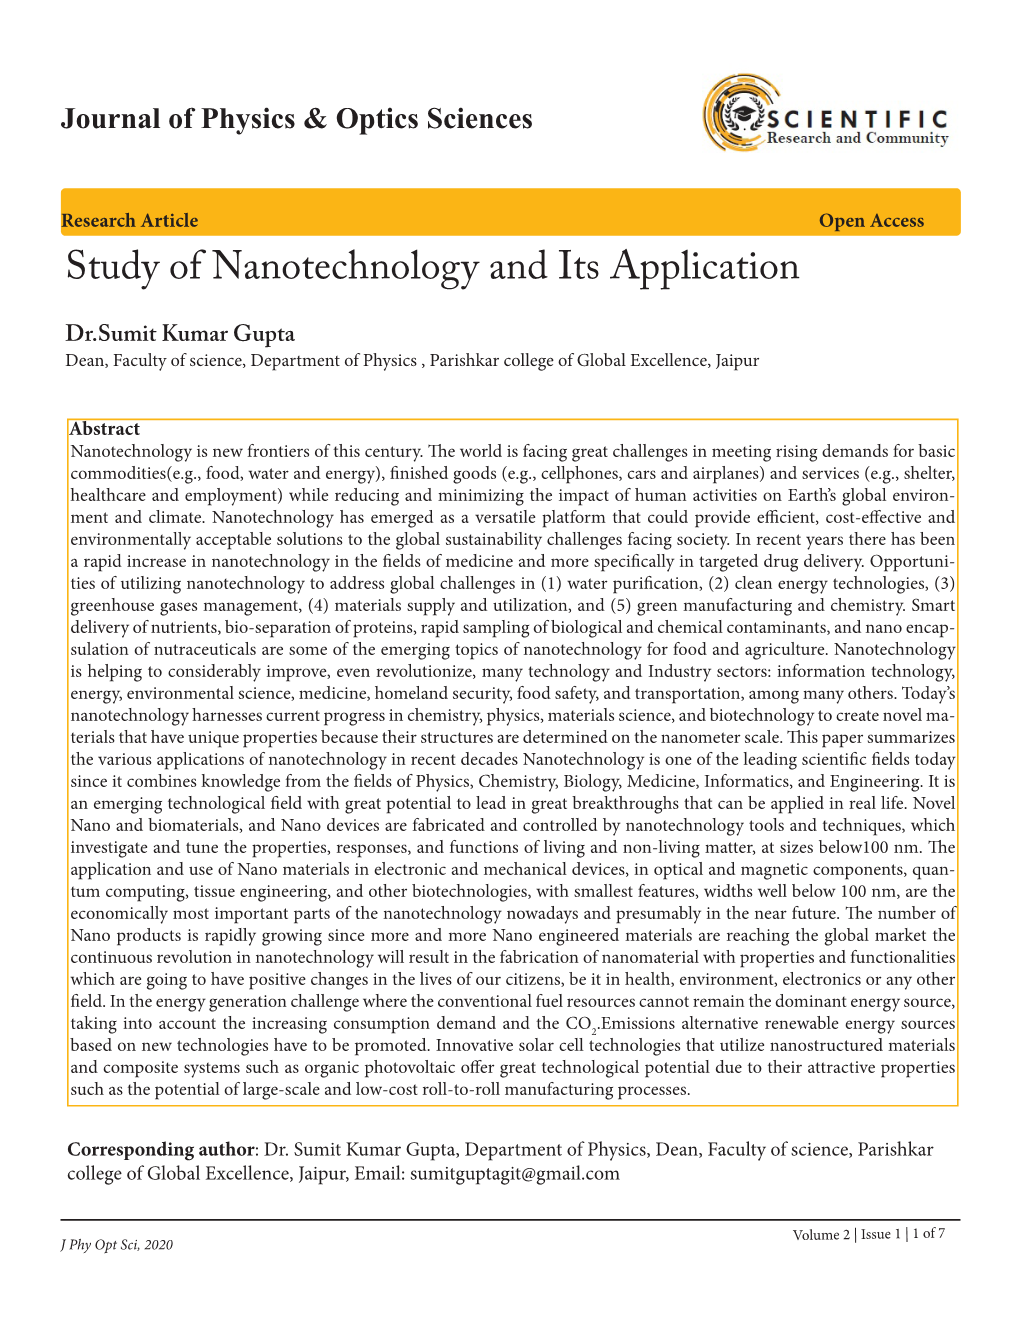 Study of Nanotechnology and Its Application